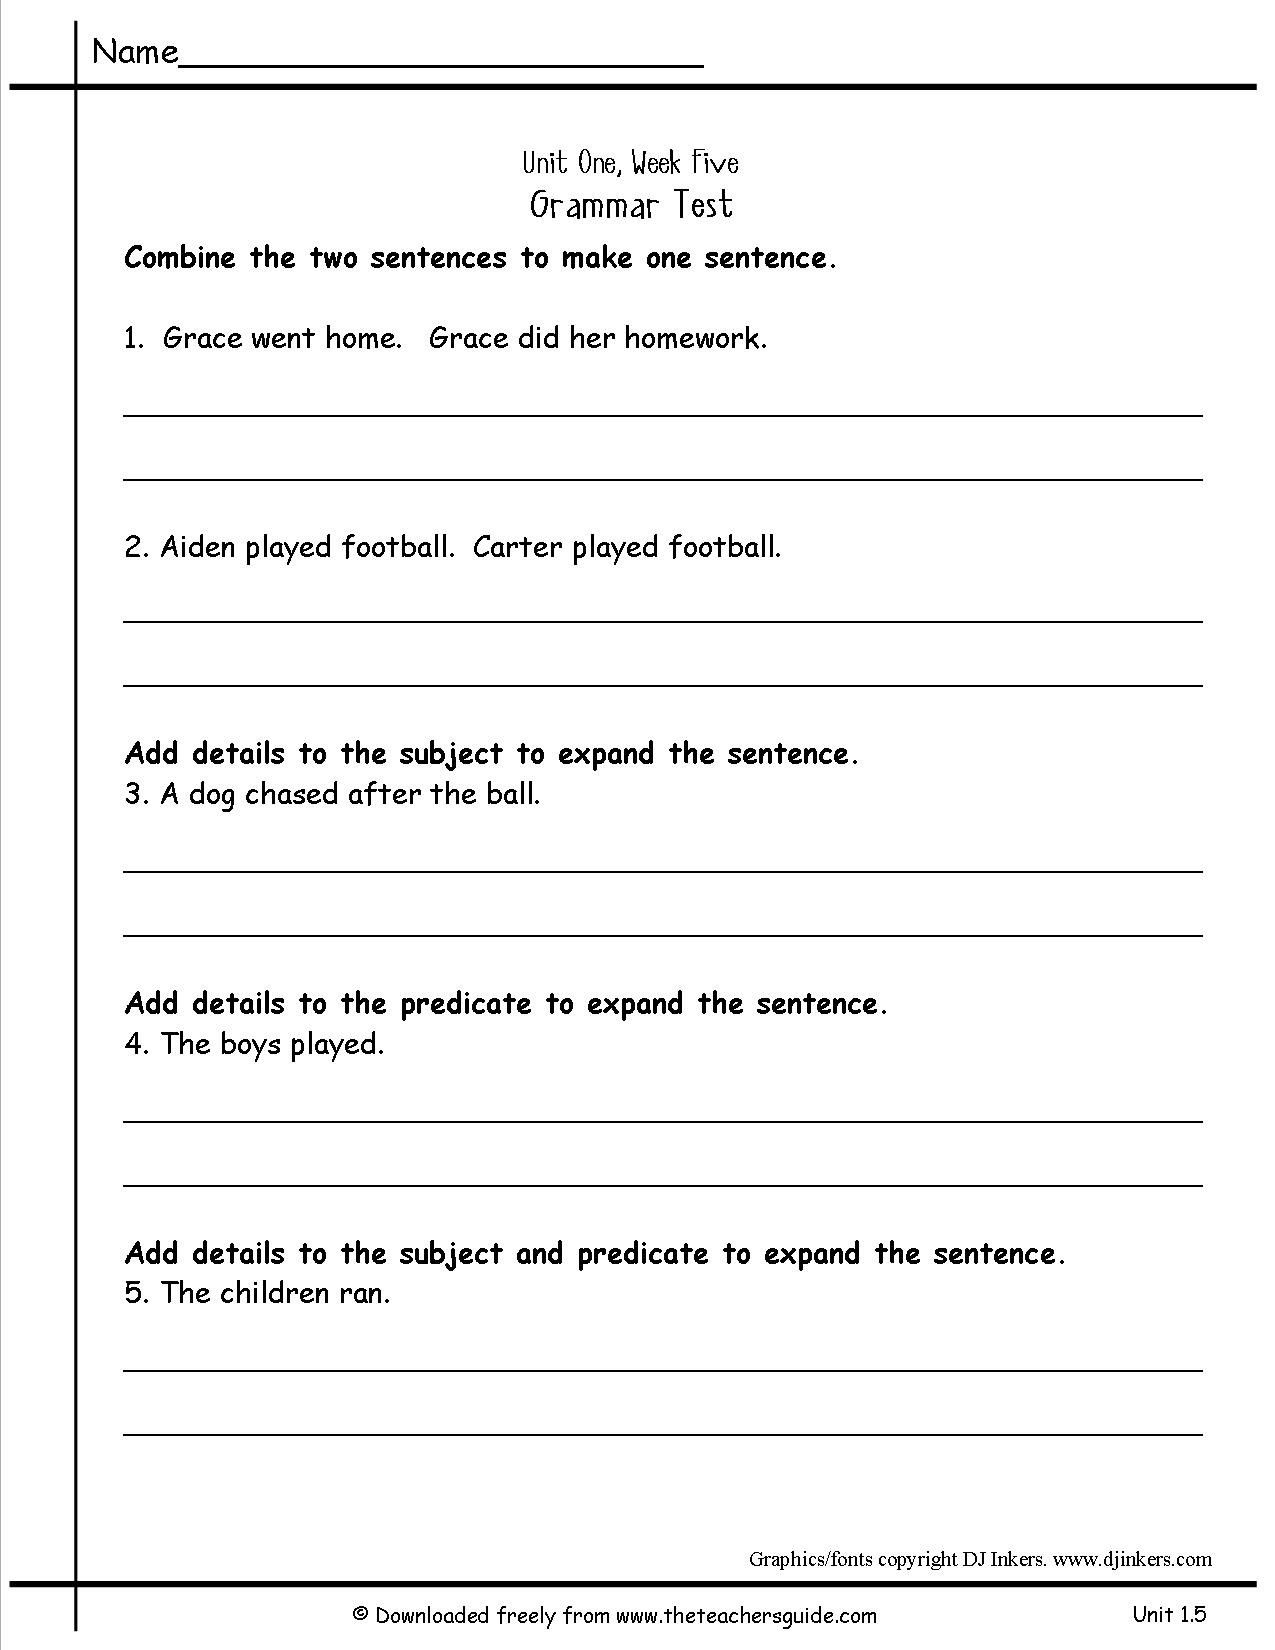 Science Worksheets 2Nd Grade Science Worksheets 2Rd Grade Free | Free Printable Science Worksheets For 2Nd Grade